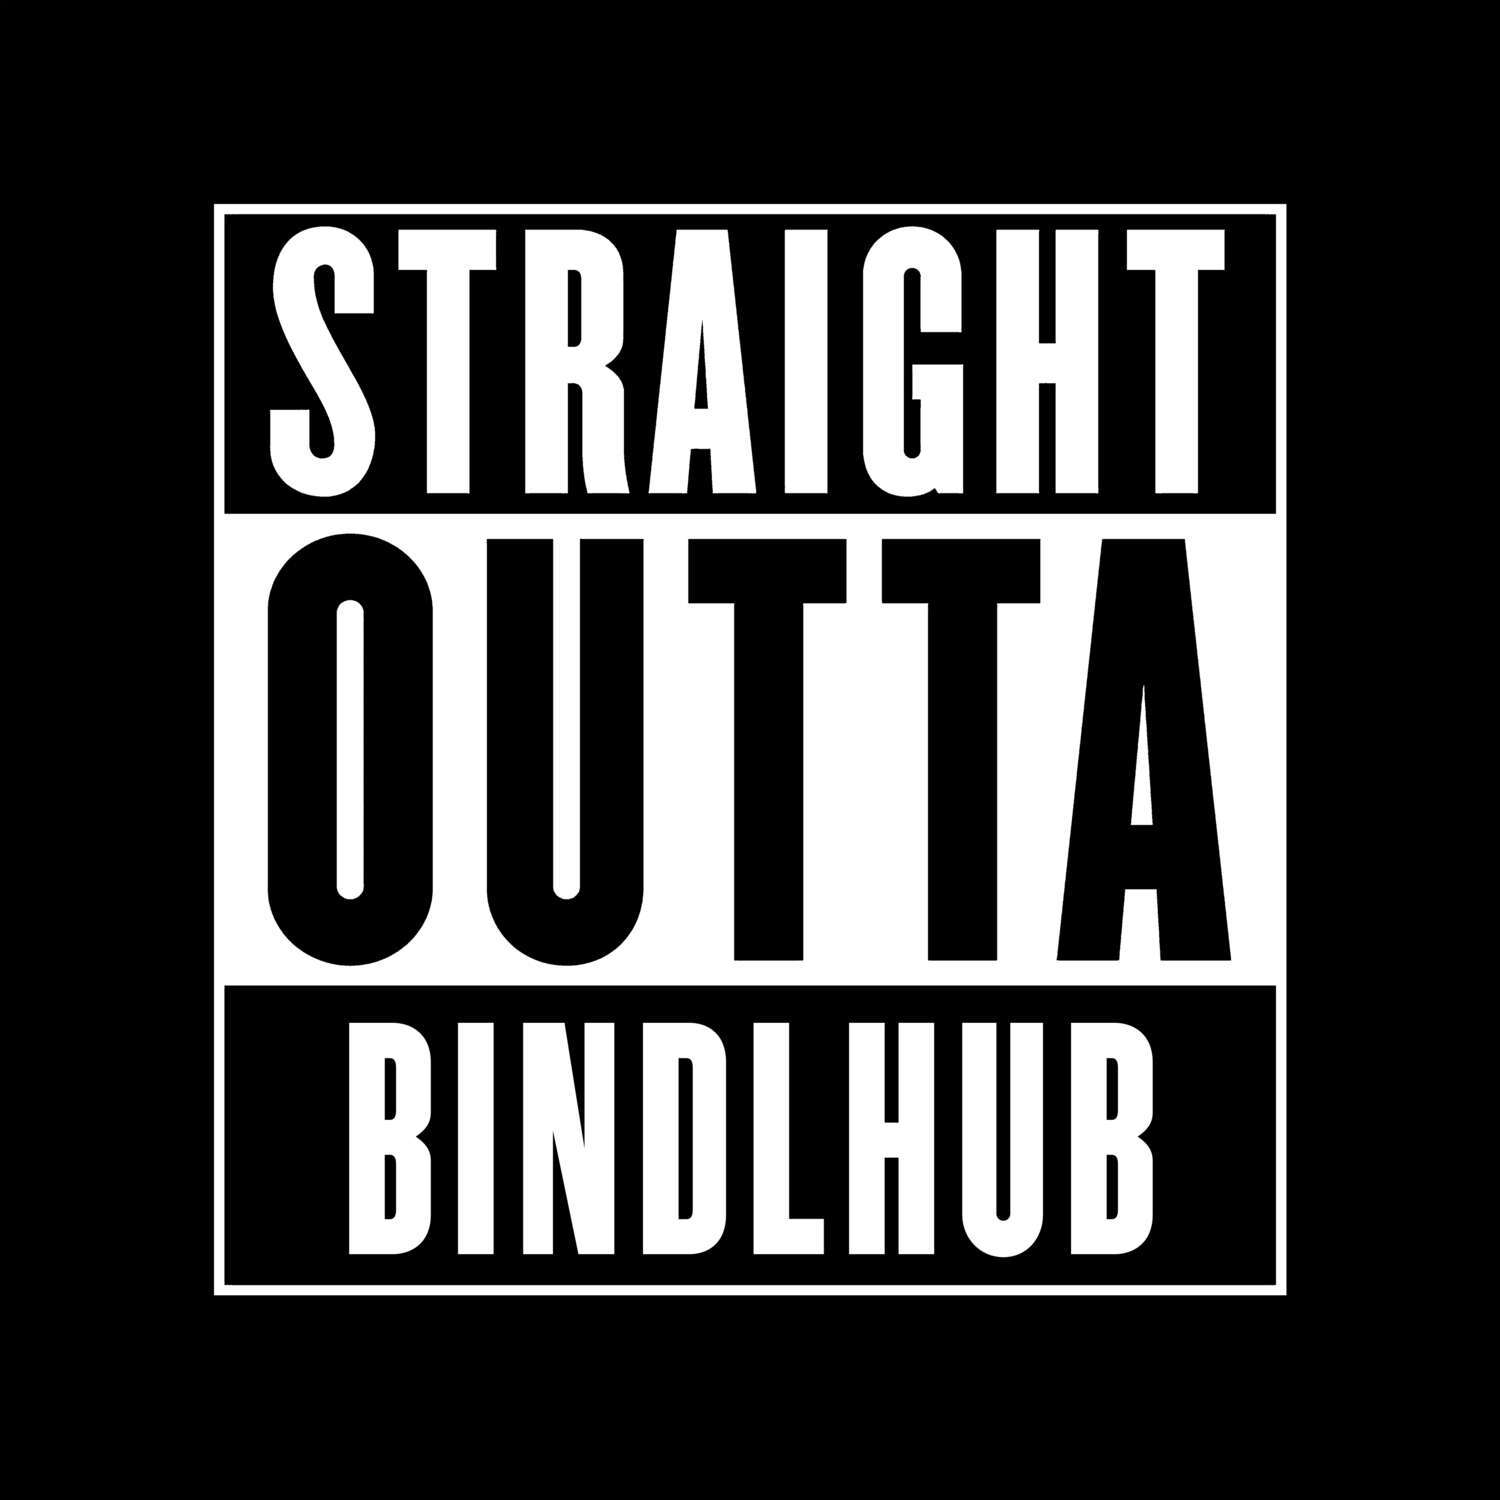 Bindlhub T-Shirt »Straight Outta«